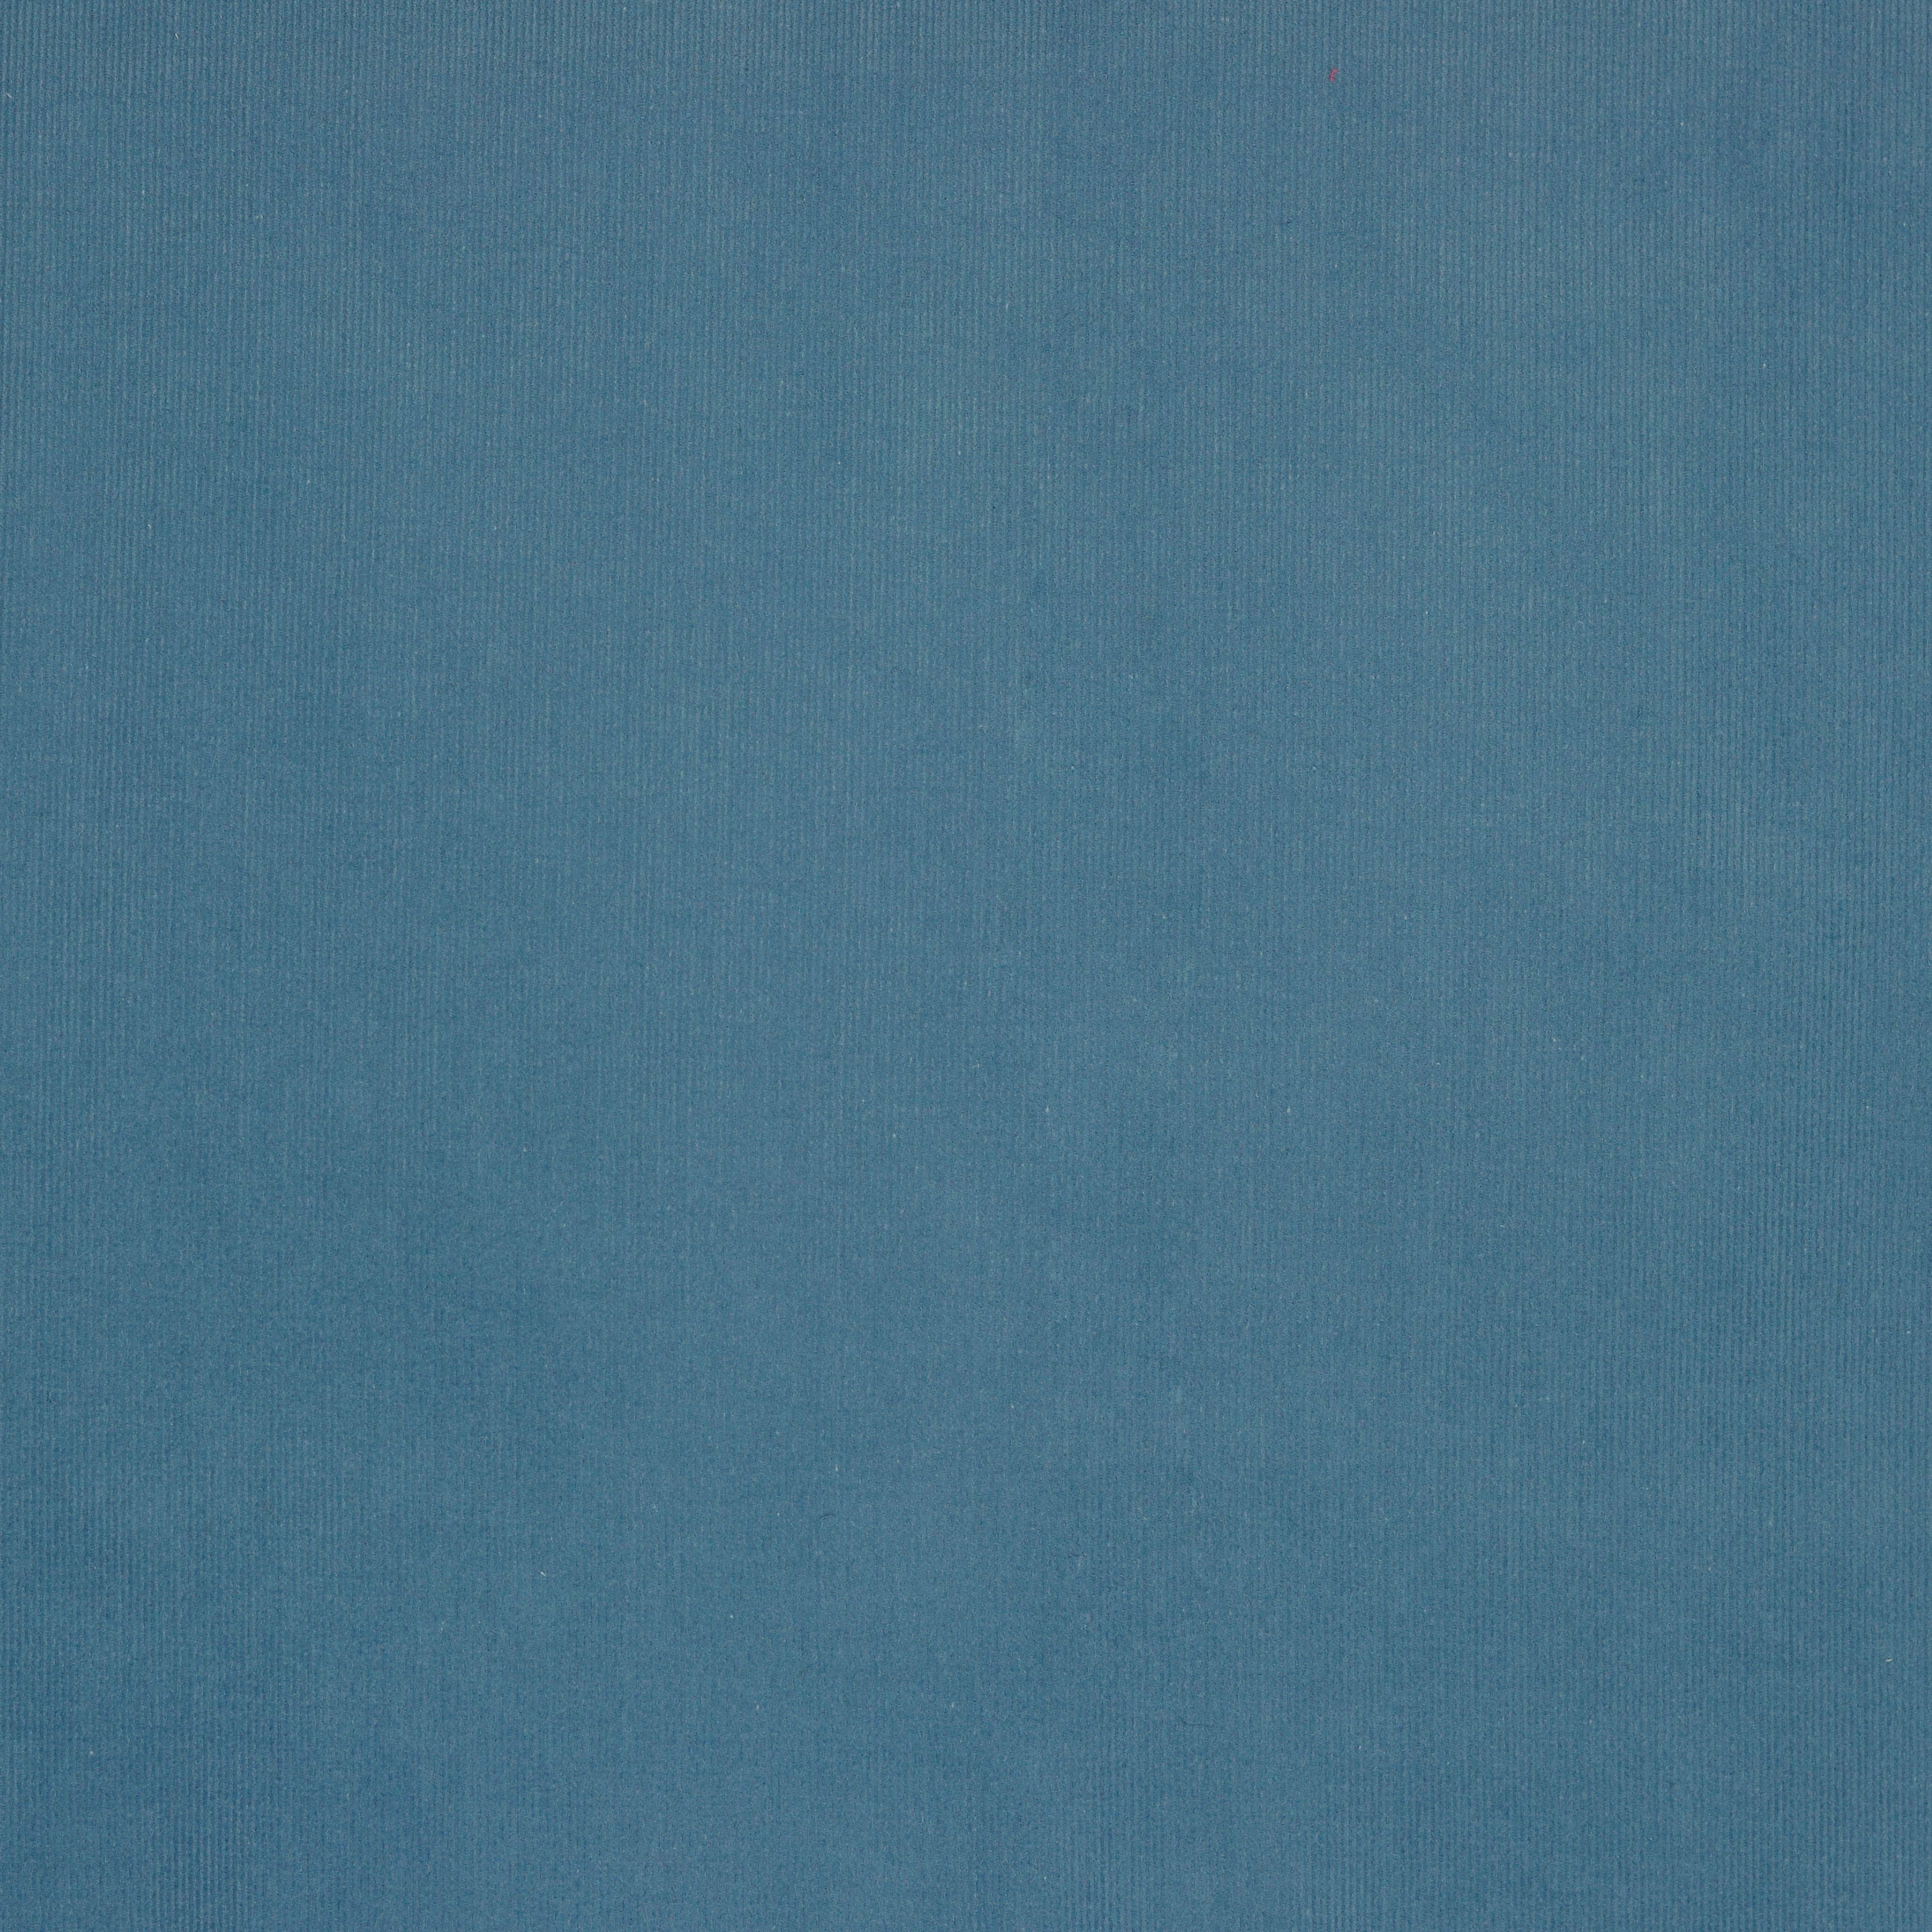 21 Wale Cotton Needlecord in Blue